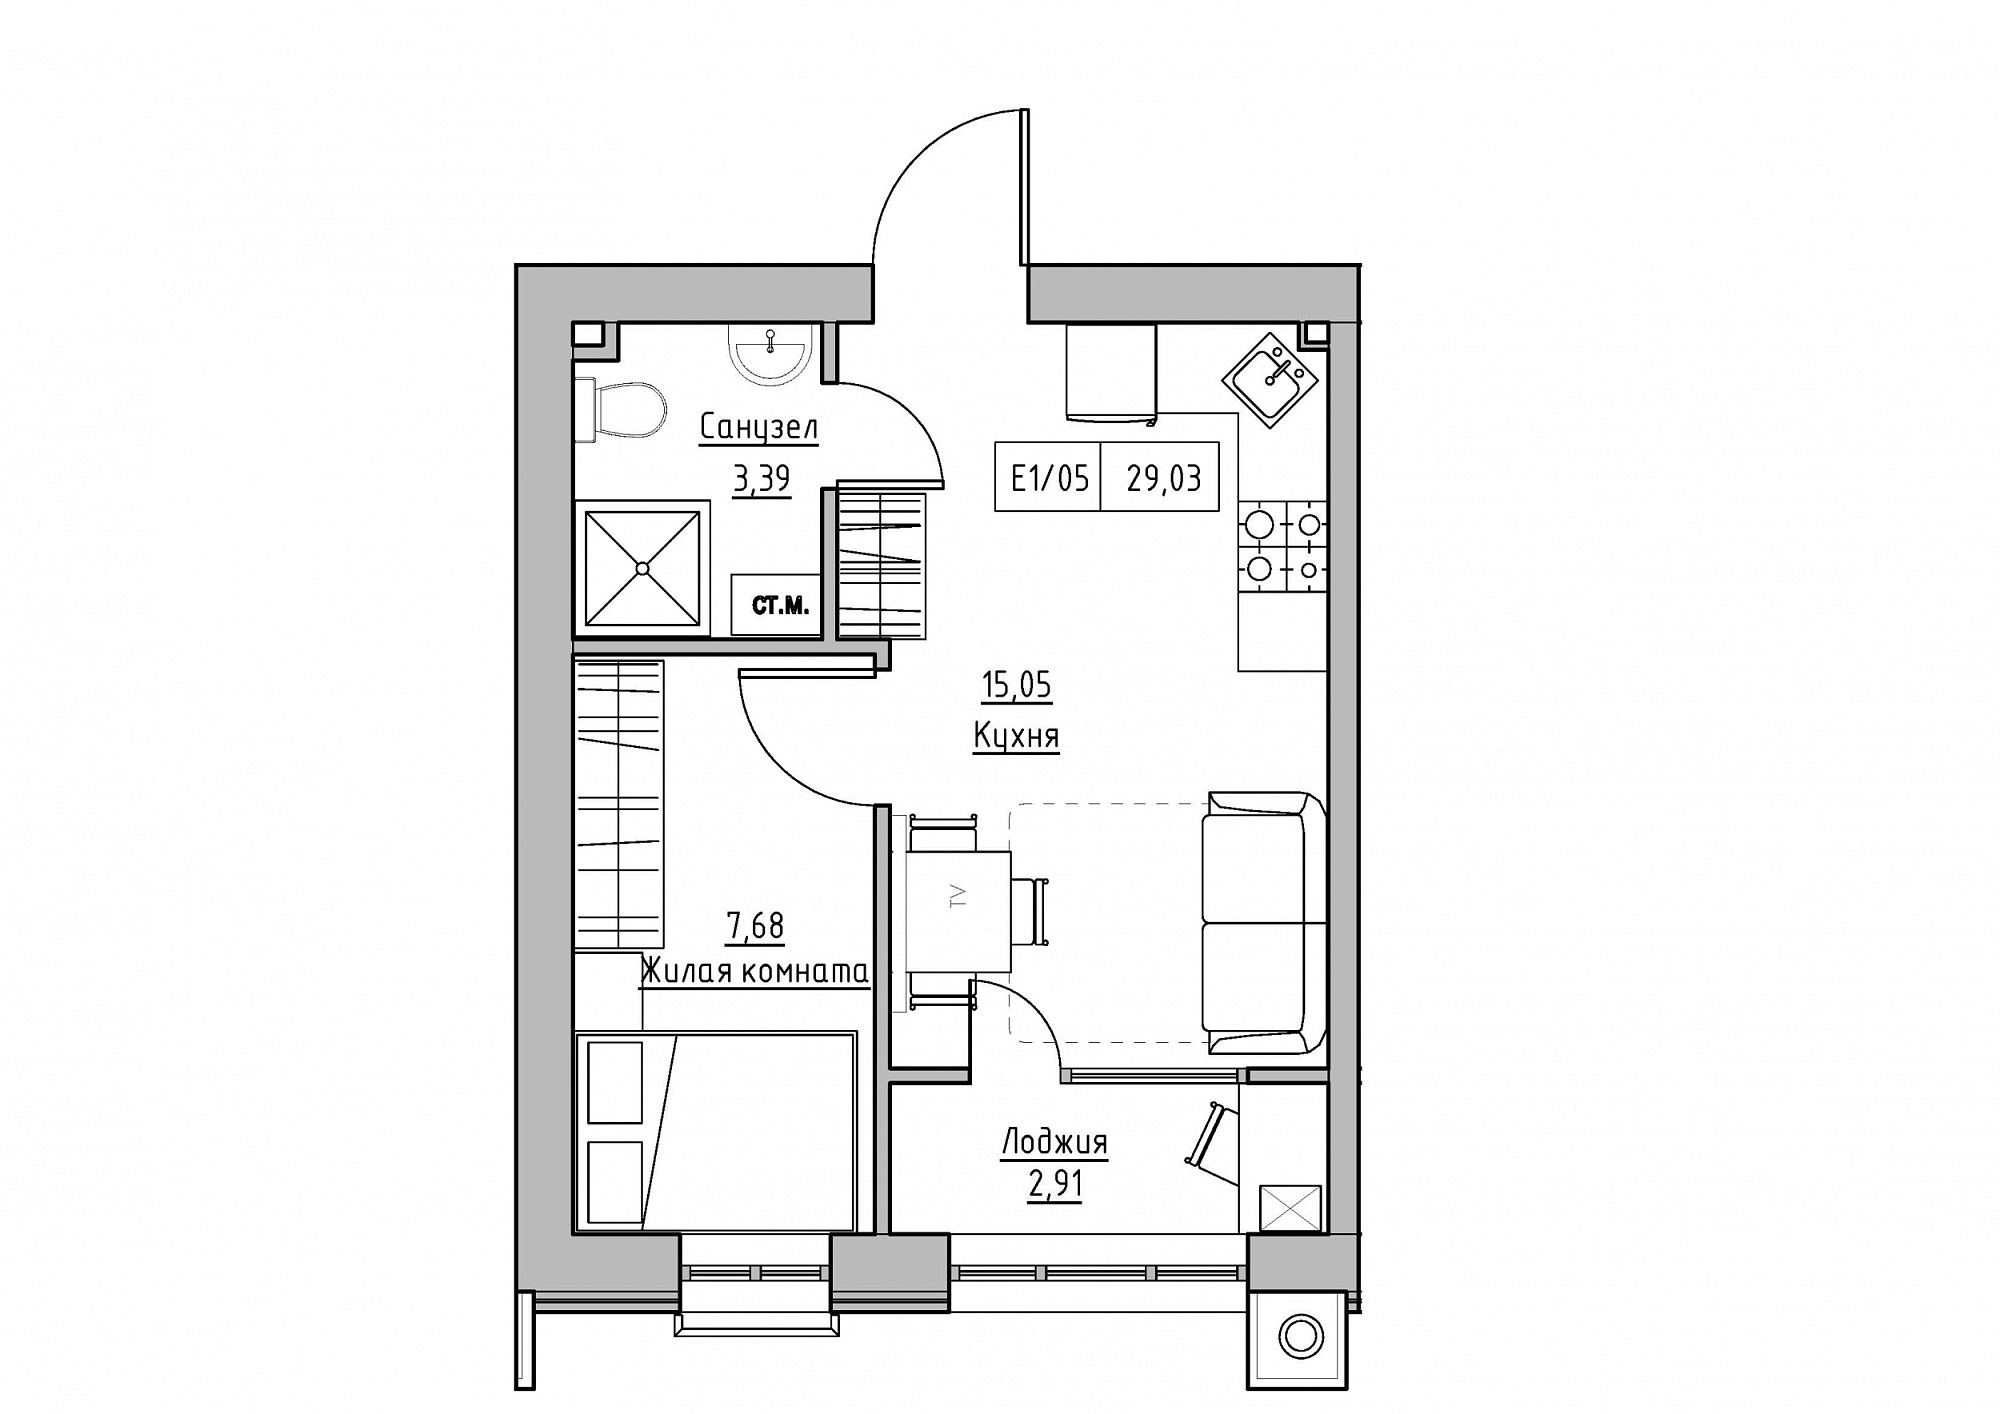 Planning 1-rm flats area 29.03m2, KS-012-03/0007.